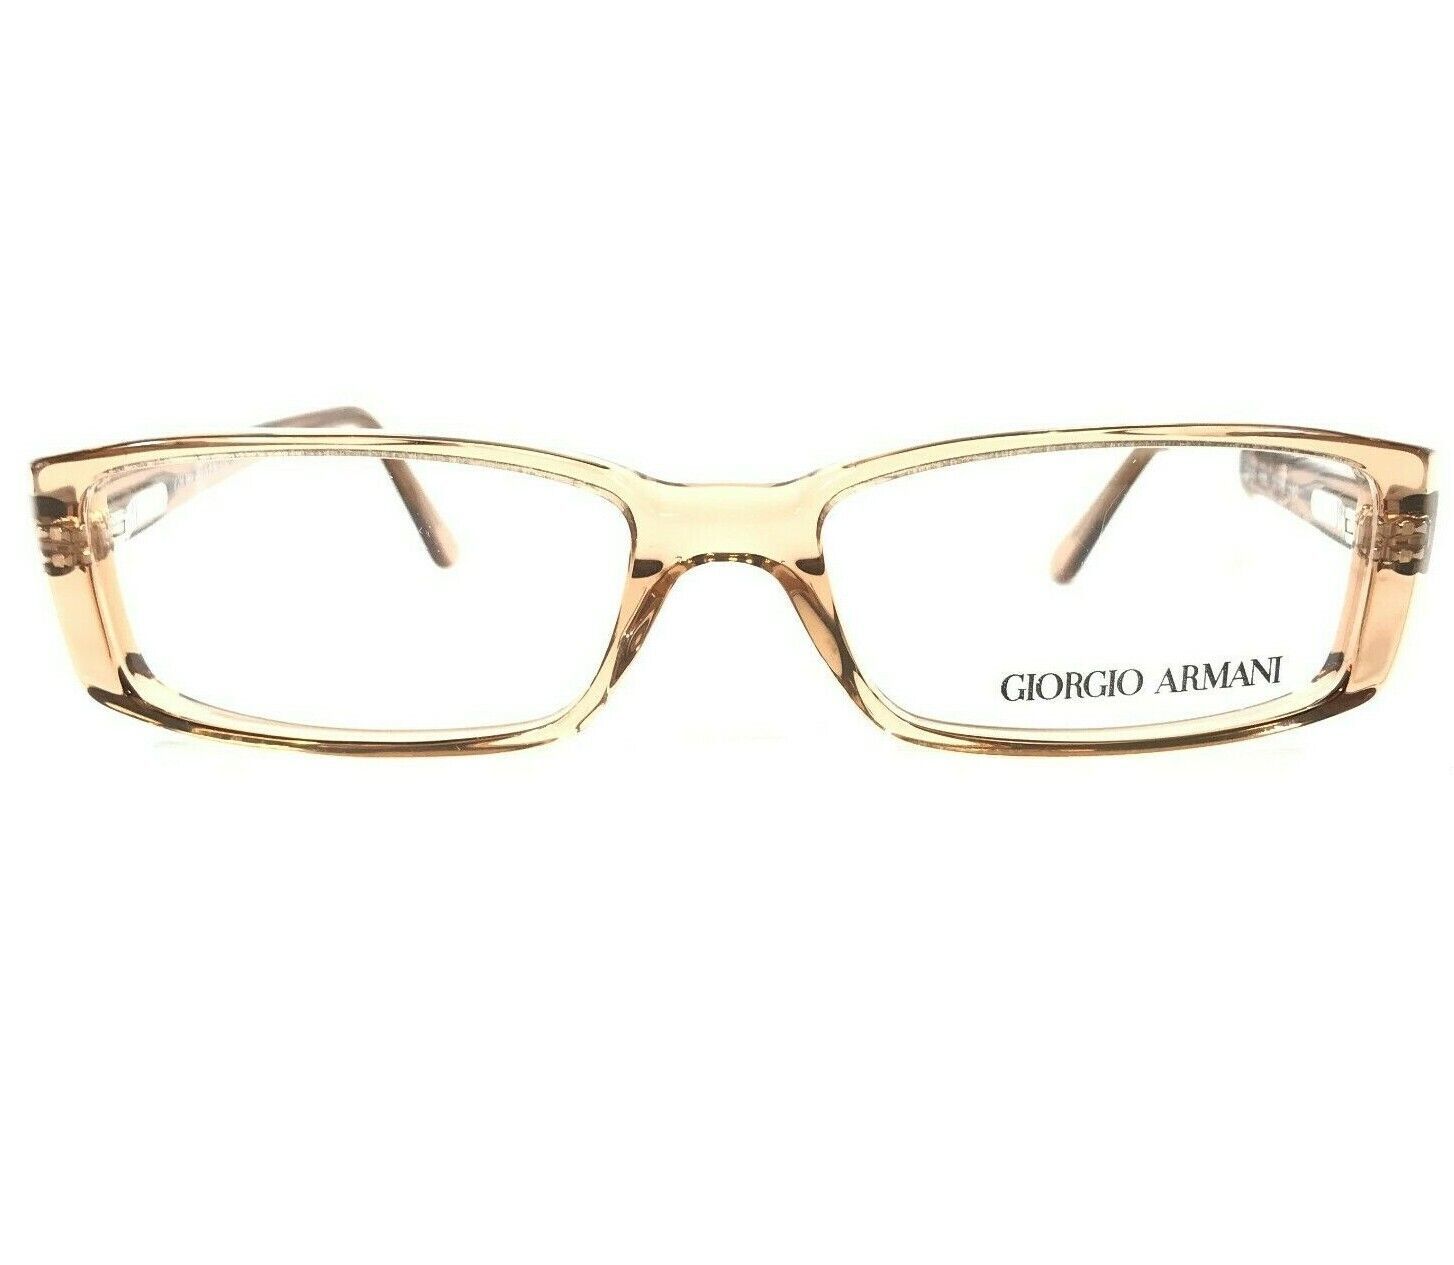 Giorgio Armani Eyeglasses Frames 2017 428 Clear Orange Rectangular 52-16-140 - $83.94